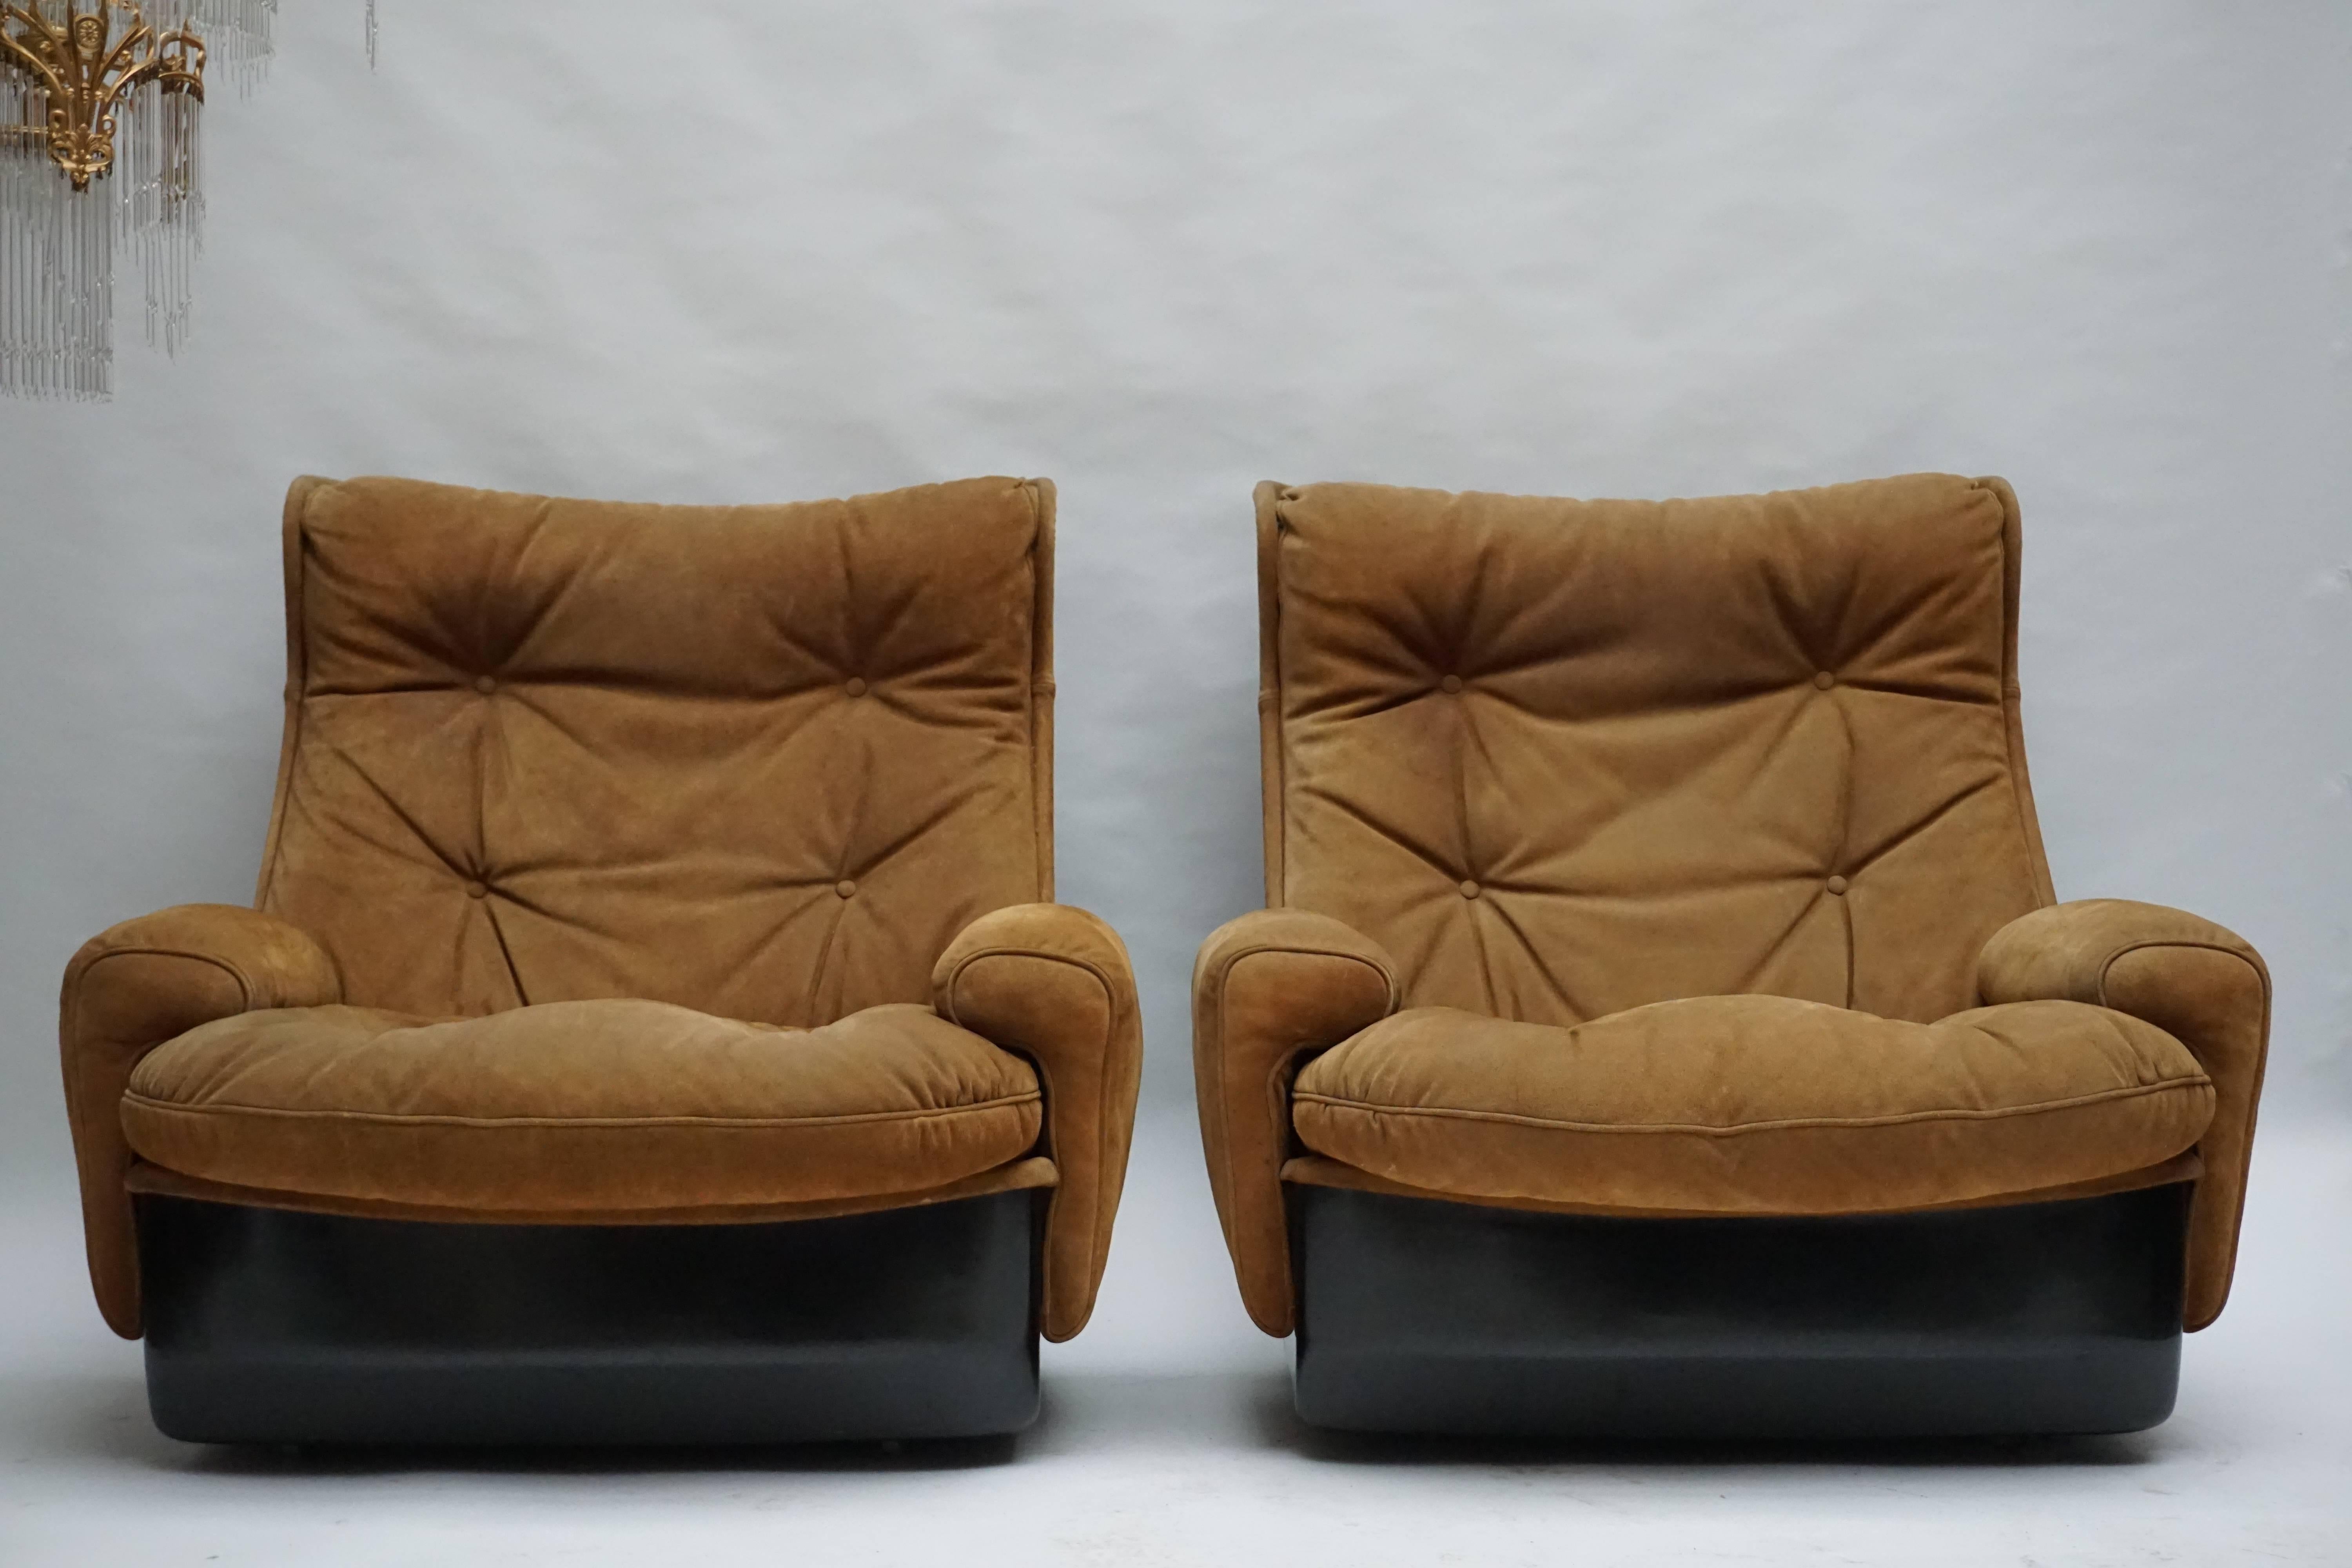 70s lounge chair